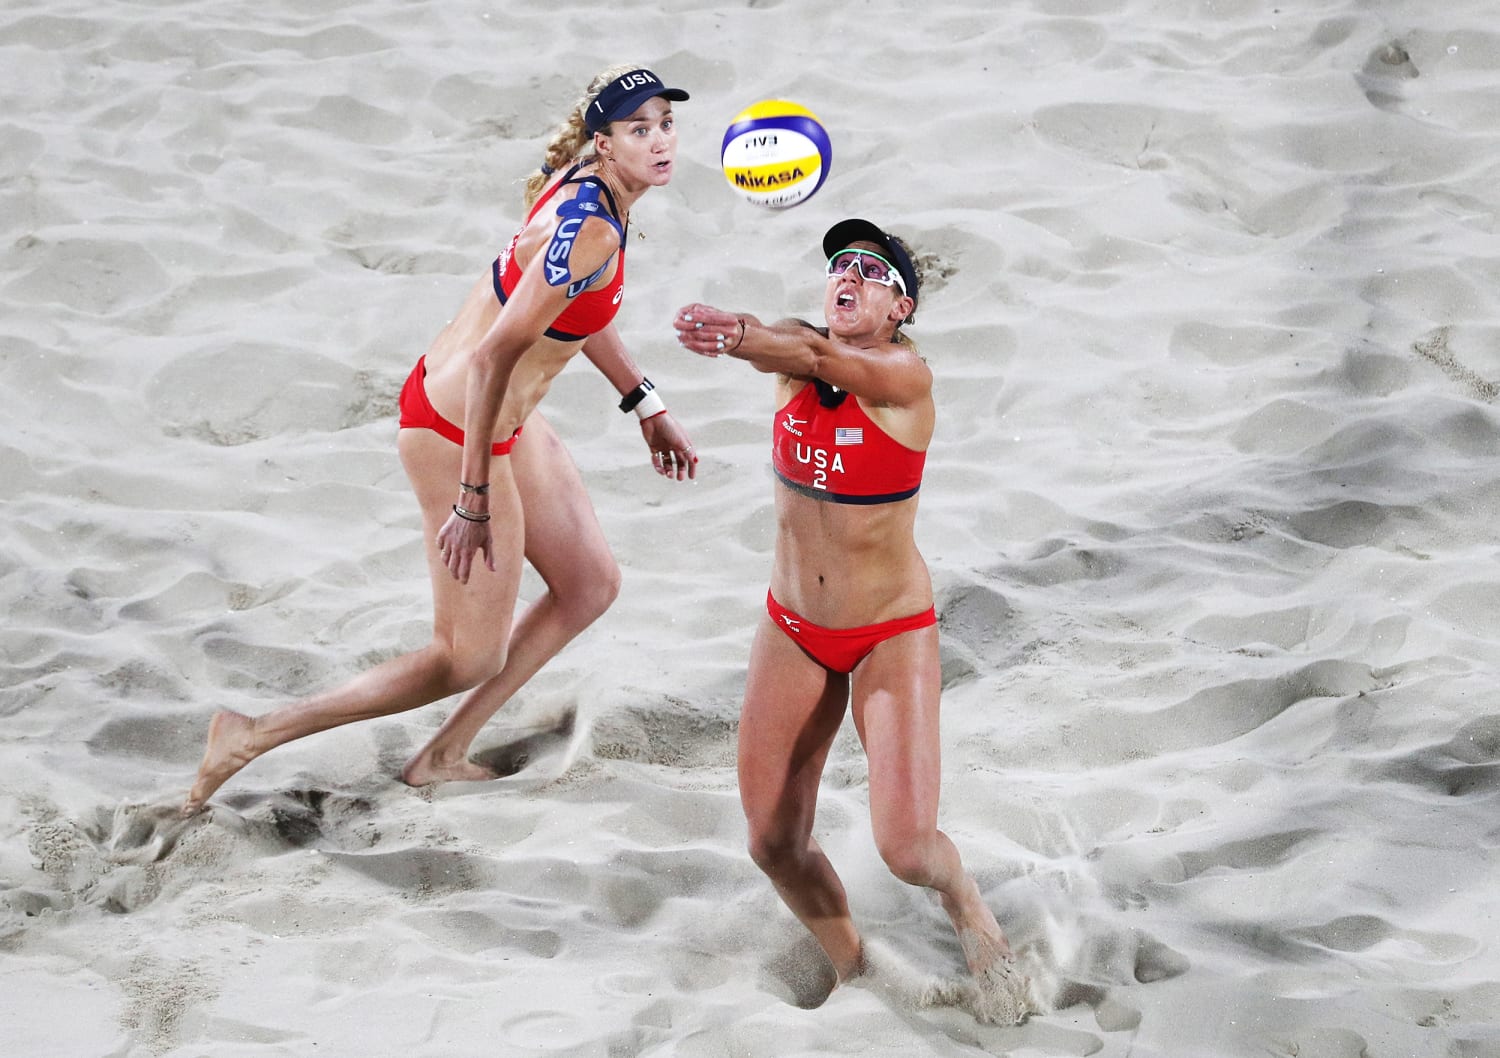 Why do women's beach volleyball players wear bikinis? 